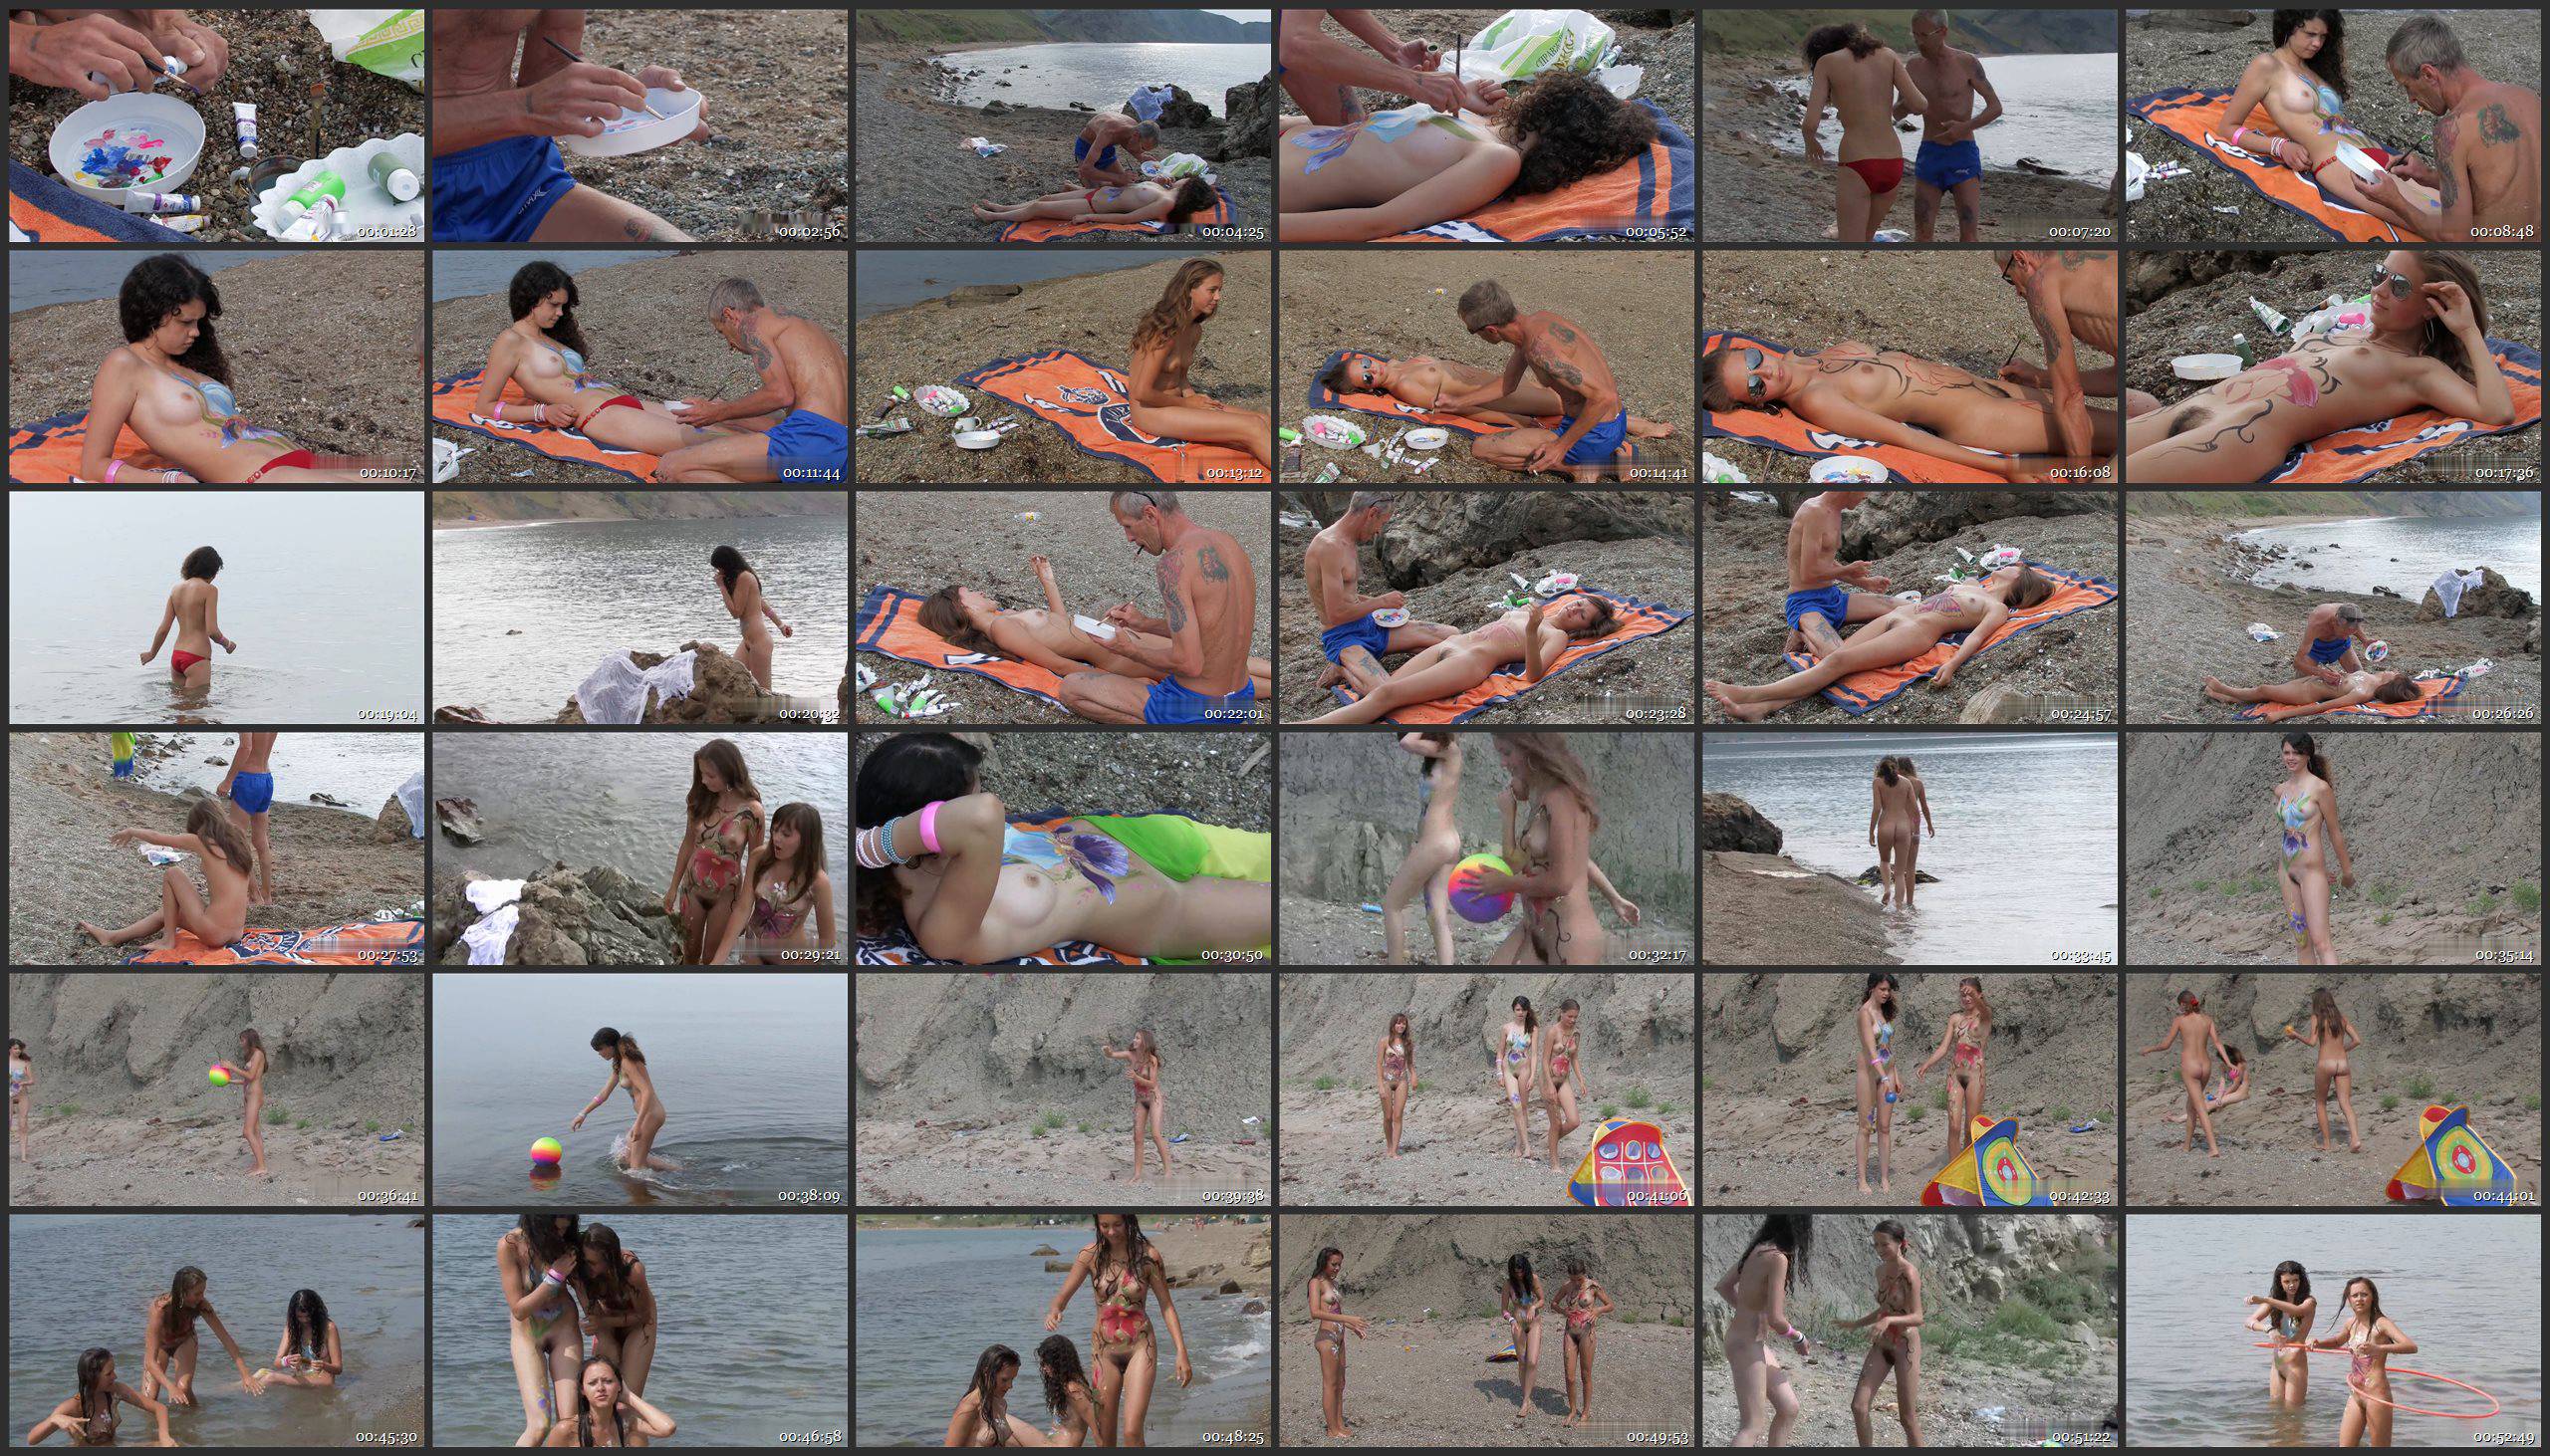 Candid-HD.com-Body Art Nudist Beach. Part 1 - Thumbnails